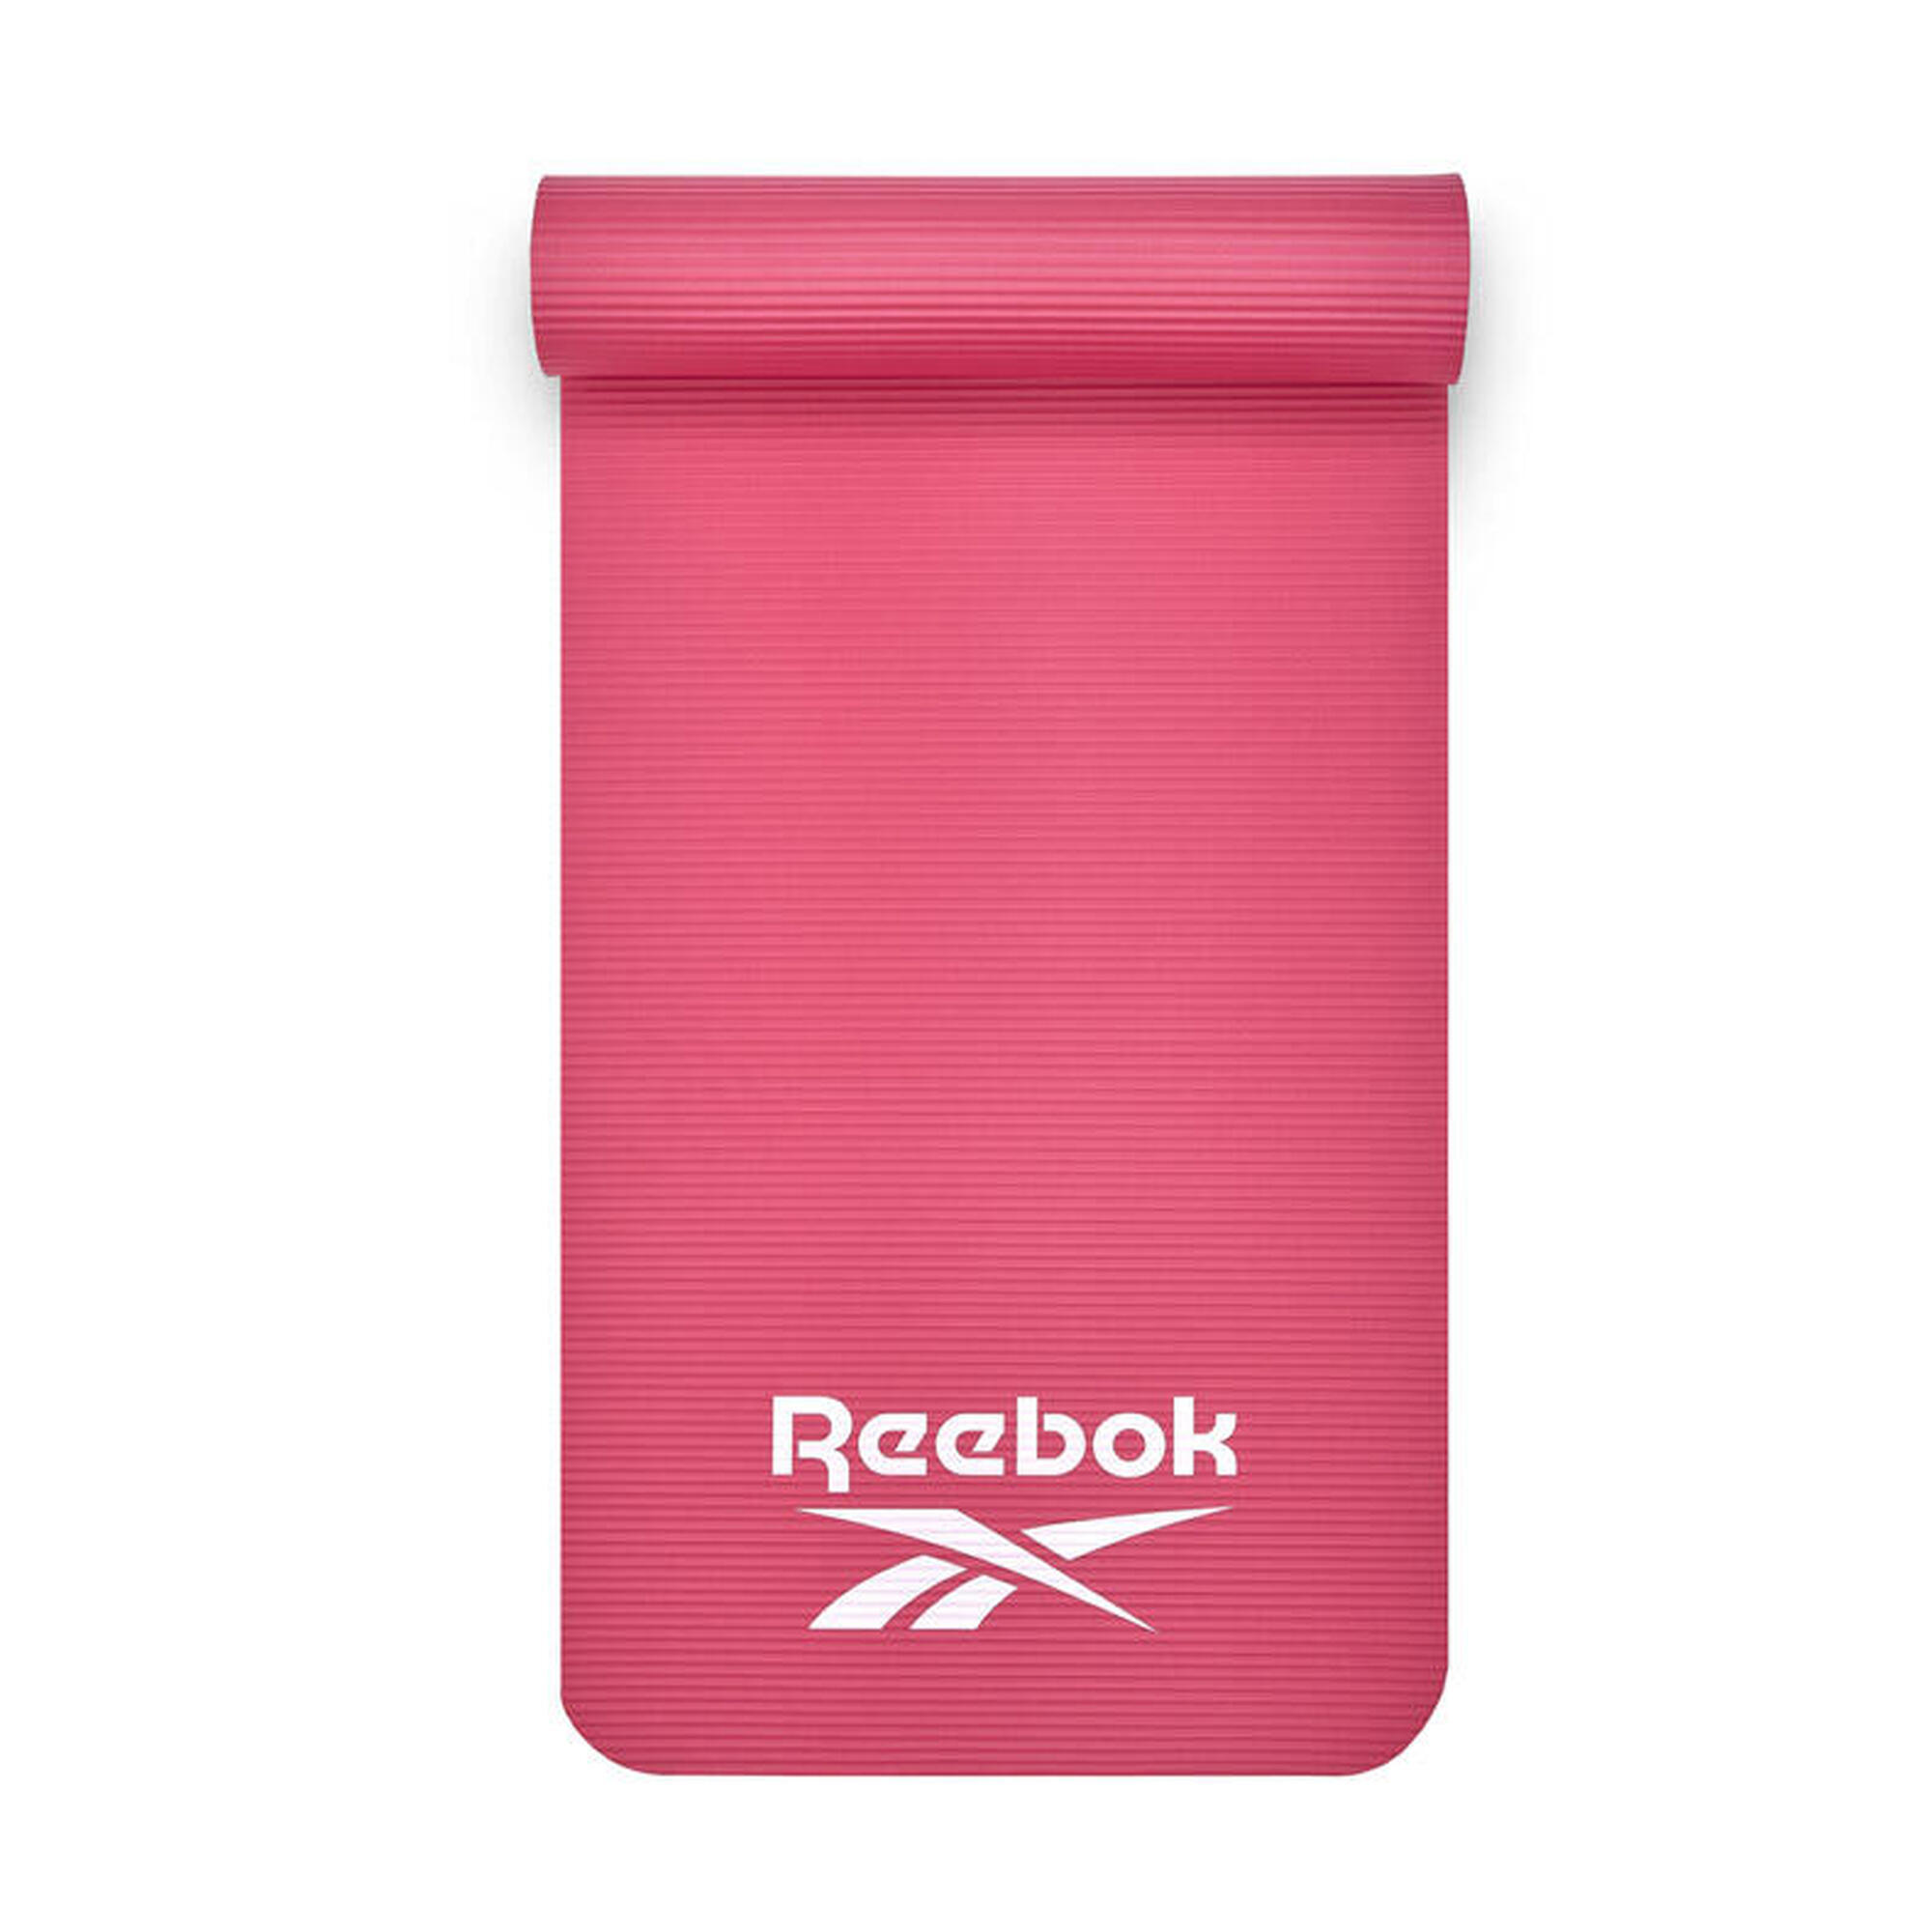 Reebok Trainingsmatte - 10mm - Rosa